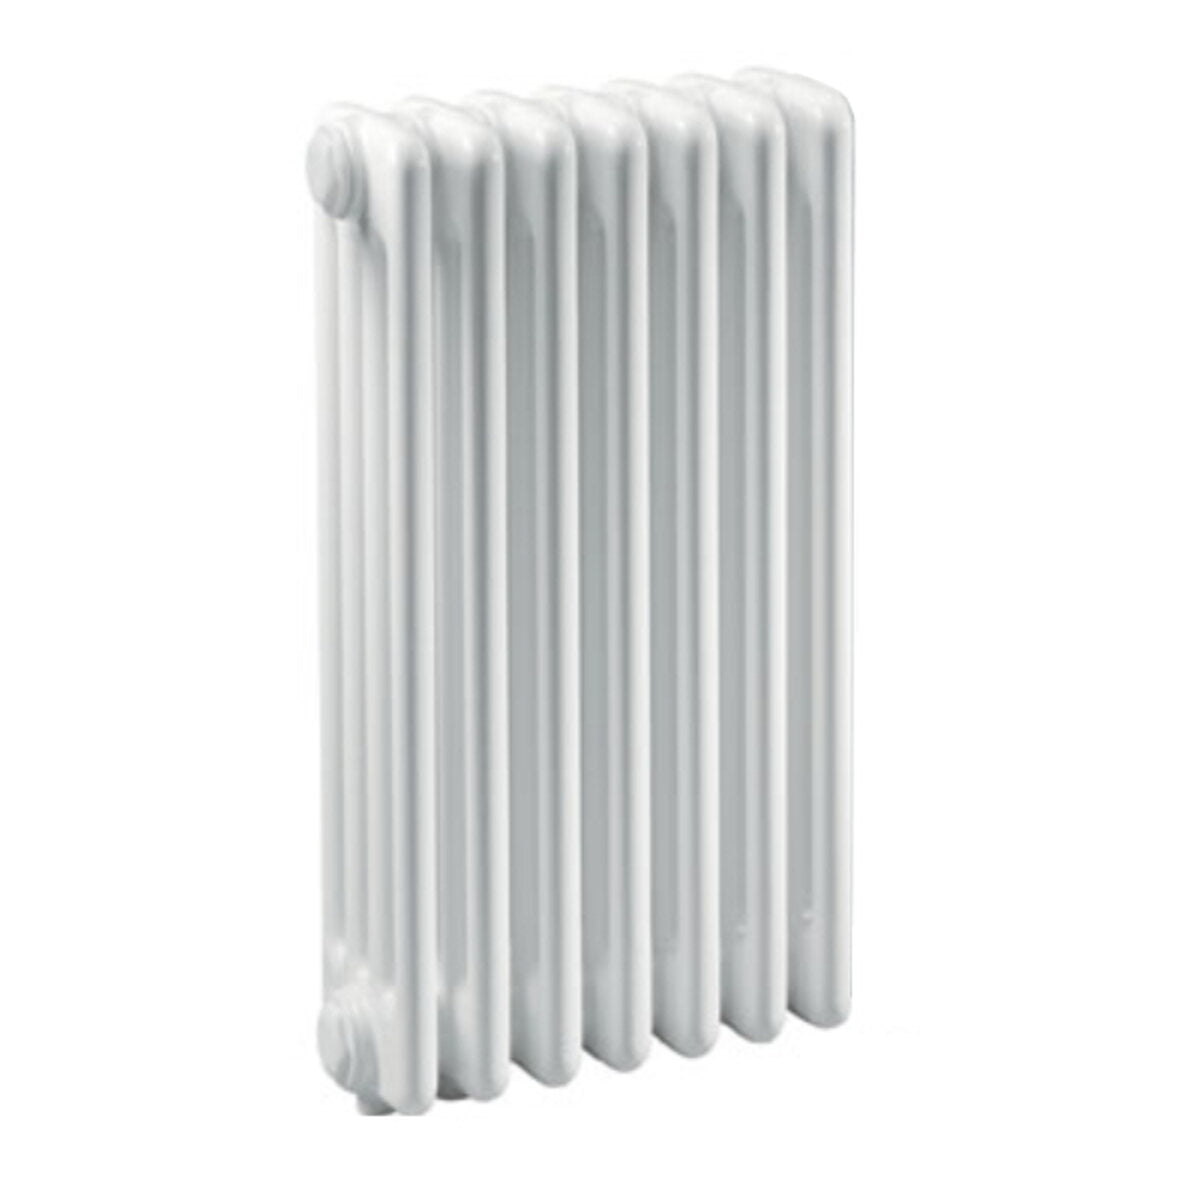 Ercos Comby steel column radiator 7 elements 3 columns center distance 1435 mm